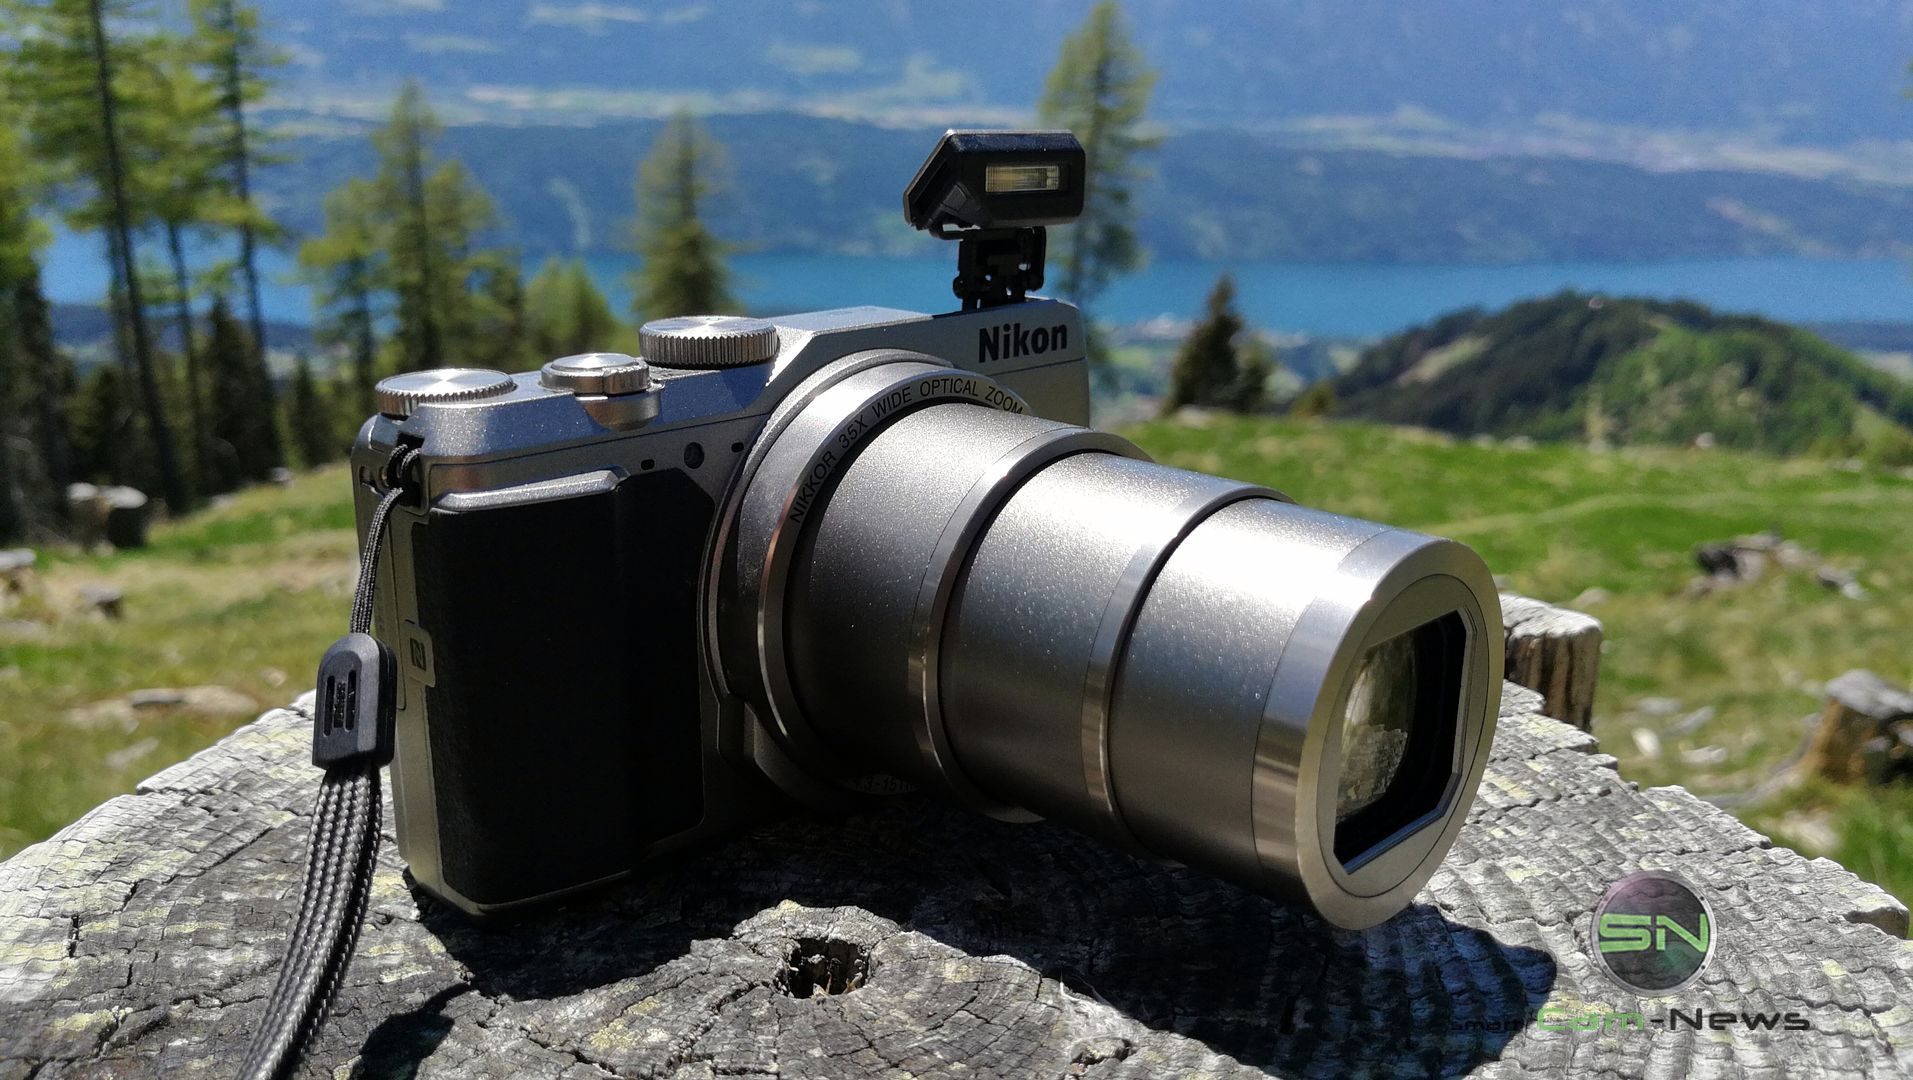 980mm Zoom 35fach - Nikon Coolpix A900 MegaZoom - Millstättersee - SmartCamNews